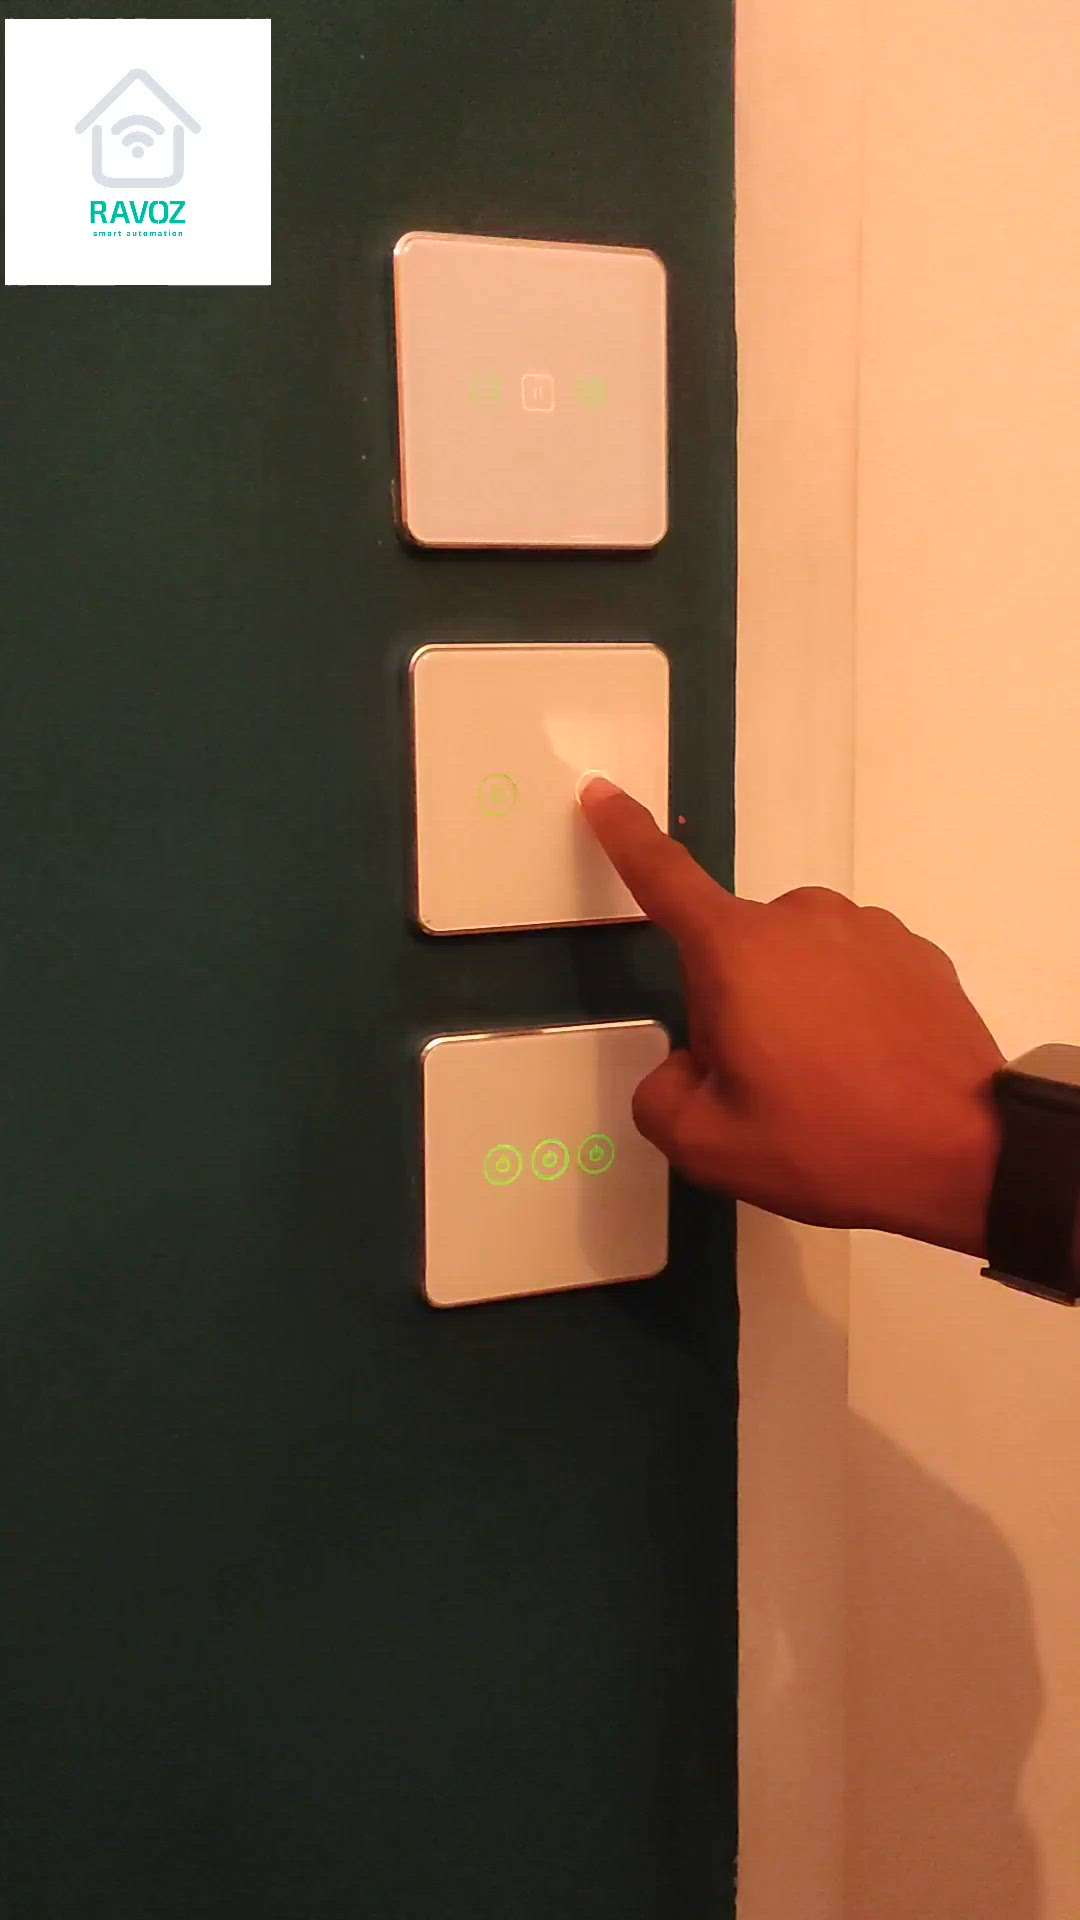 Ravoz 

#HomeAutomation #lightingautimation #smarthomeautomation #Smart_touch #smartswitches